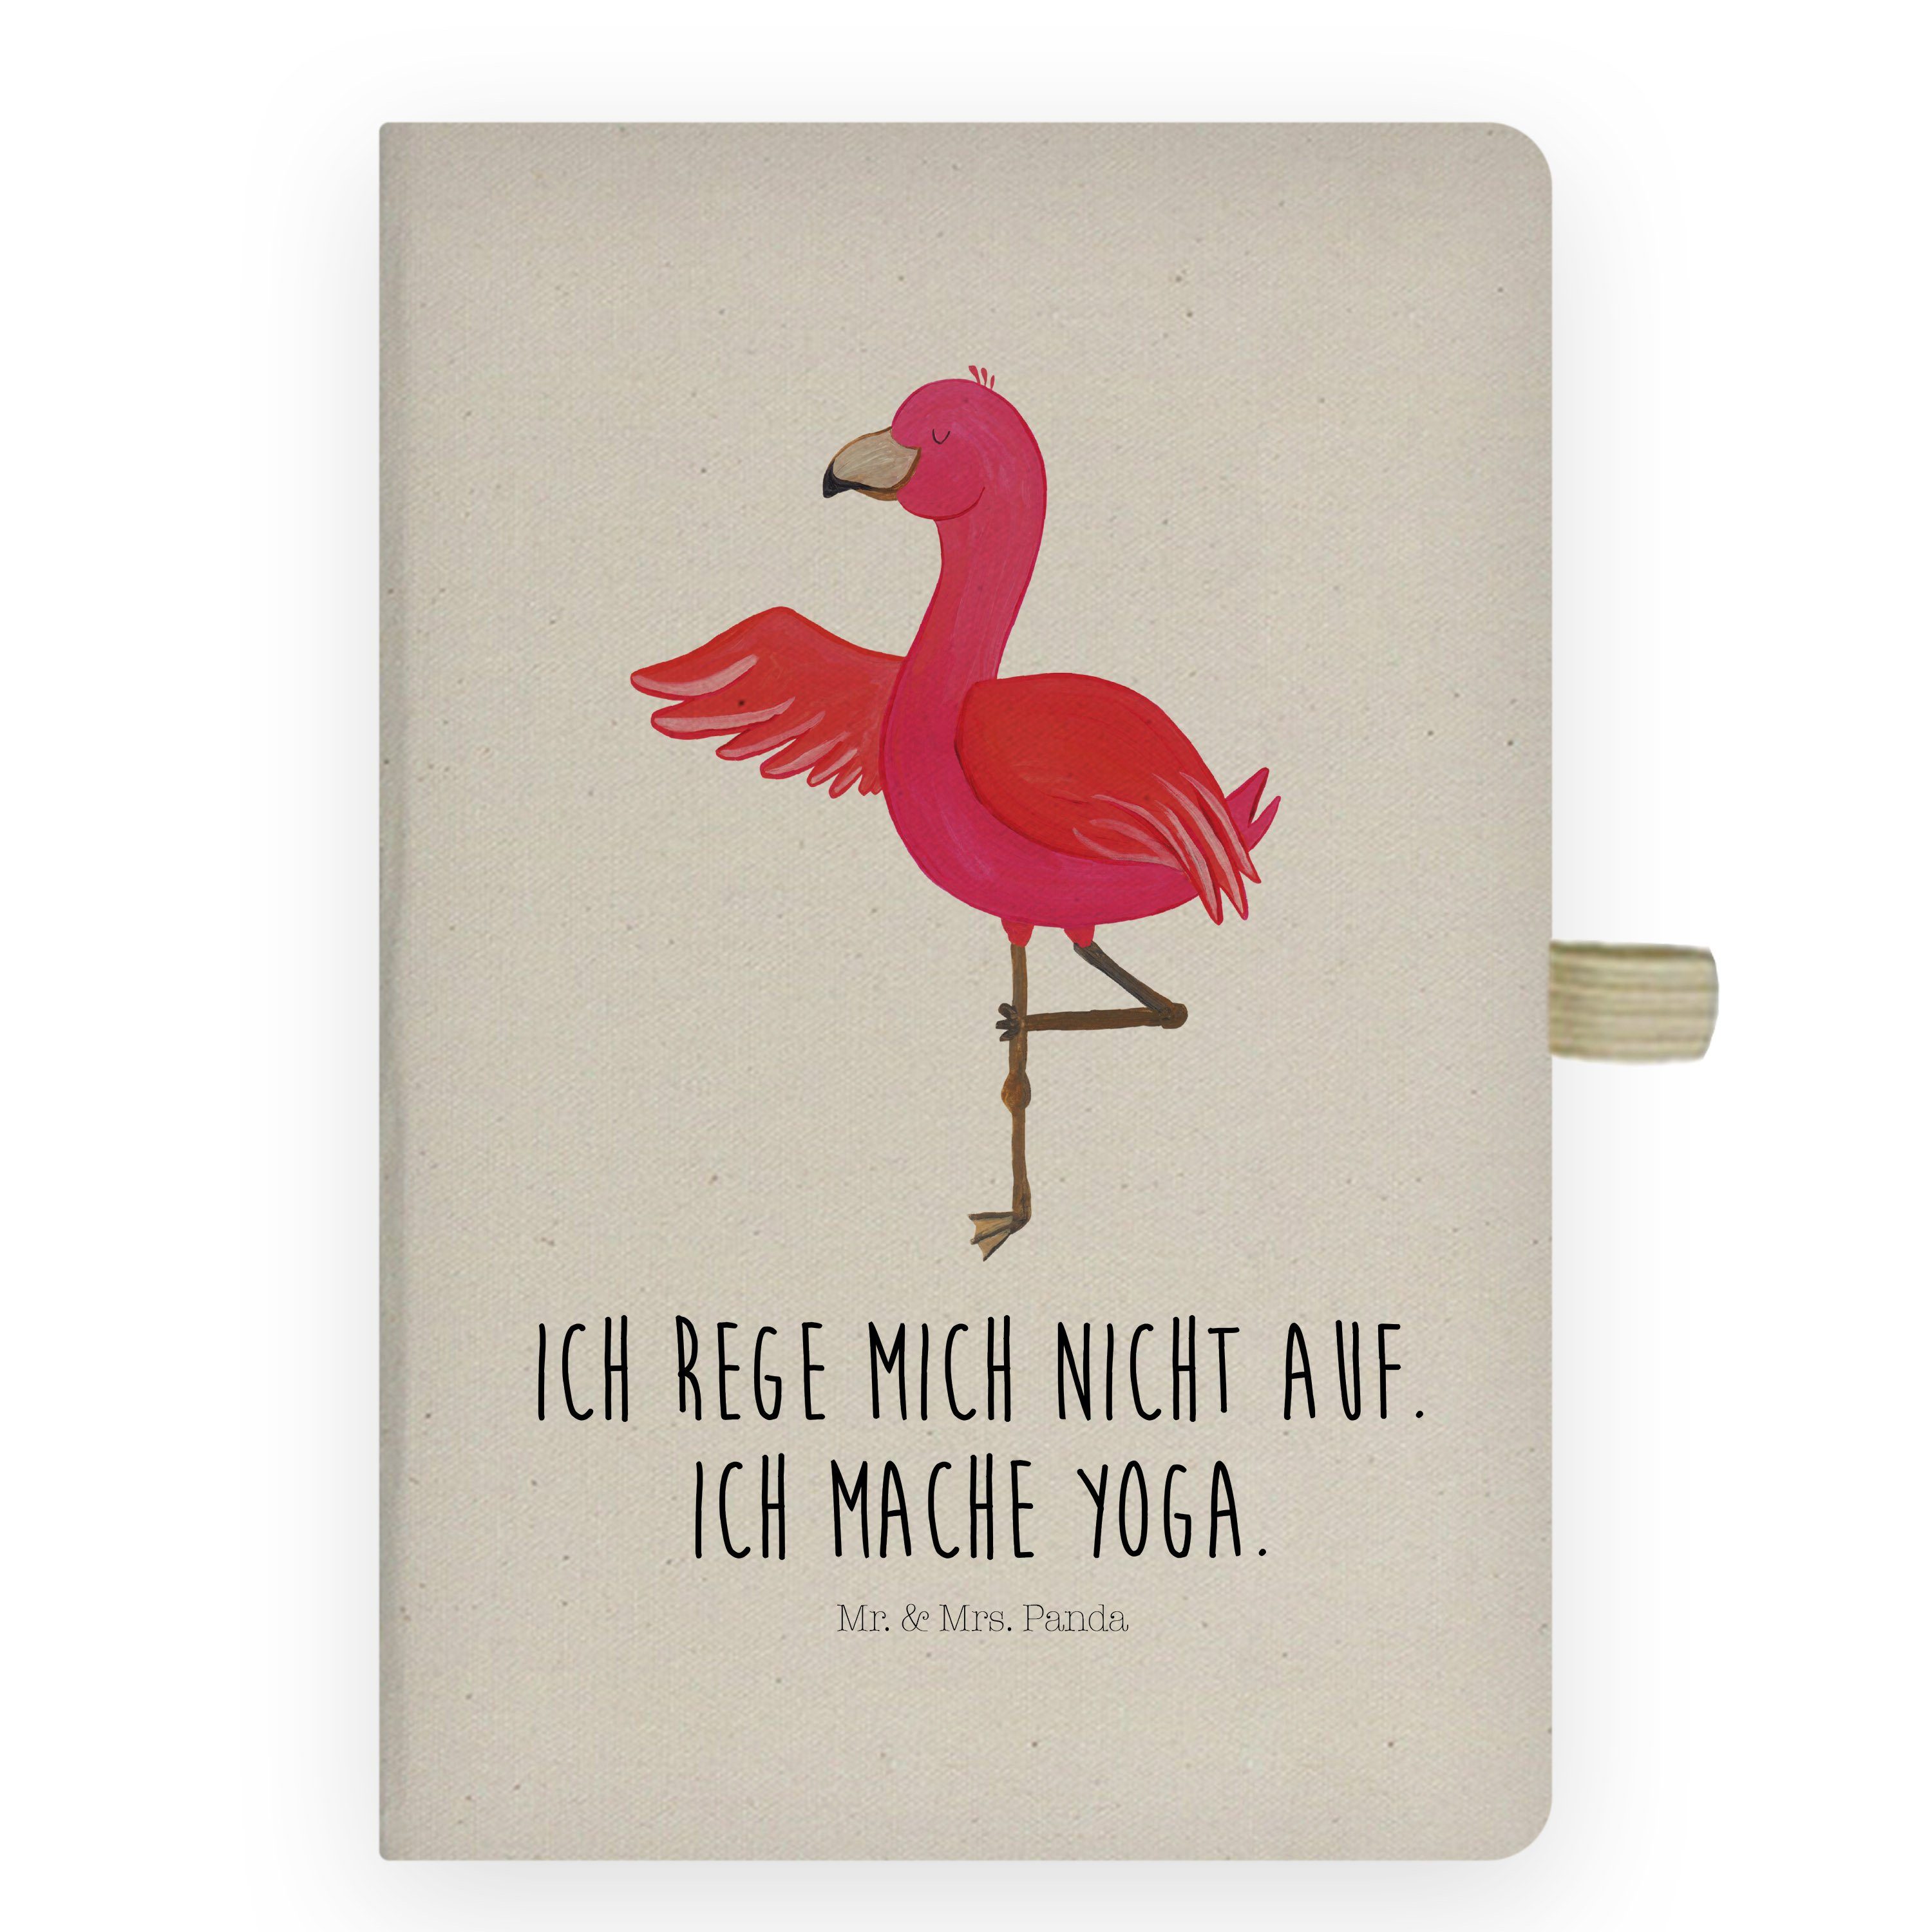 Mr. & Mrs. Panda Notizbuch Flamingo Yoga - Transparent - Geschenk, Schreibbuch, Rosa, Skizzenbuc Mr. & Mrs. Panda